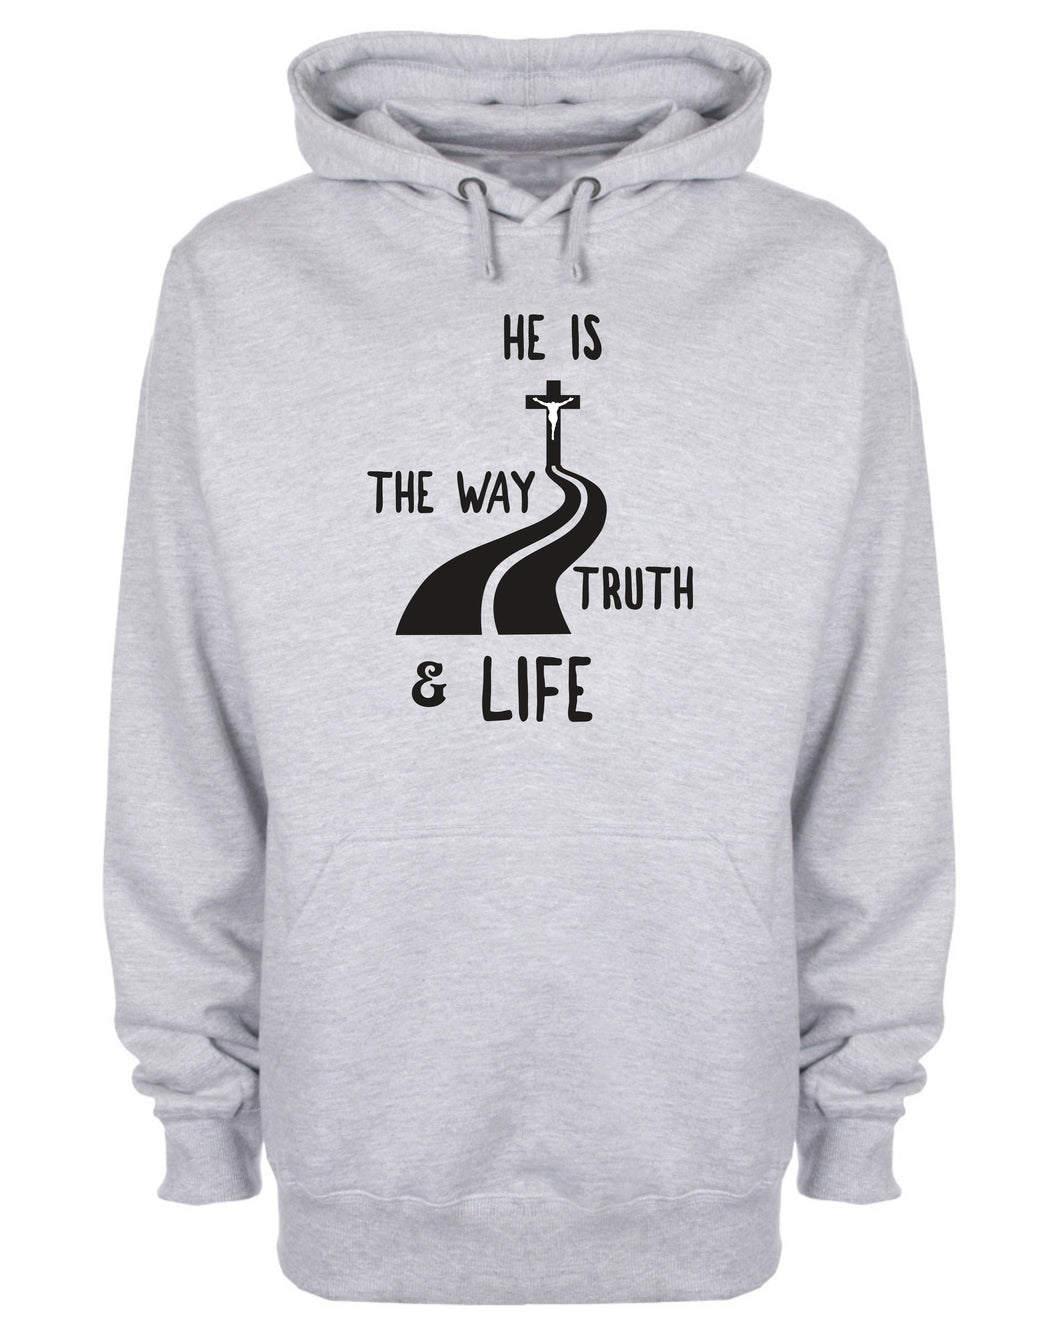 He Is The Way Truth and Life Hoodie Jesus Christ Christian Sweatshirt